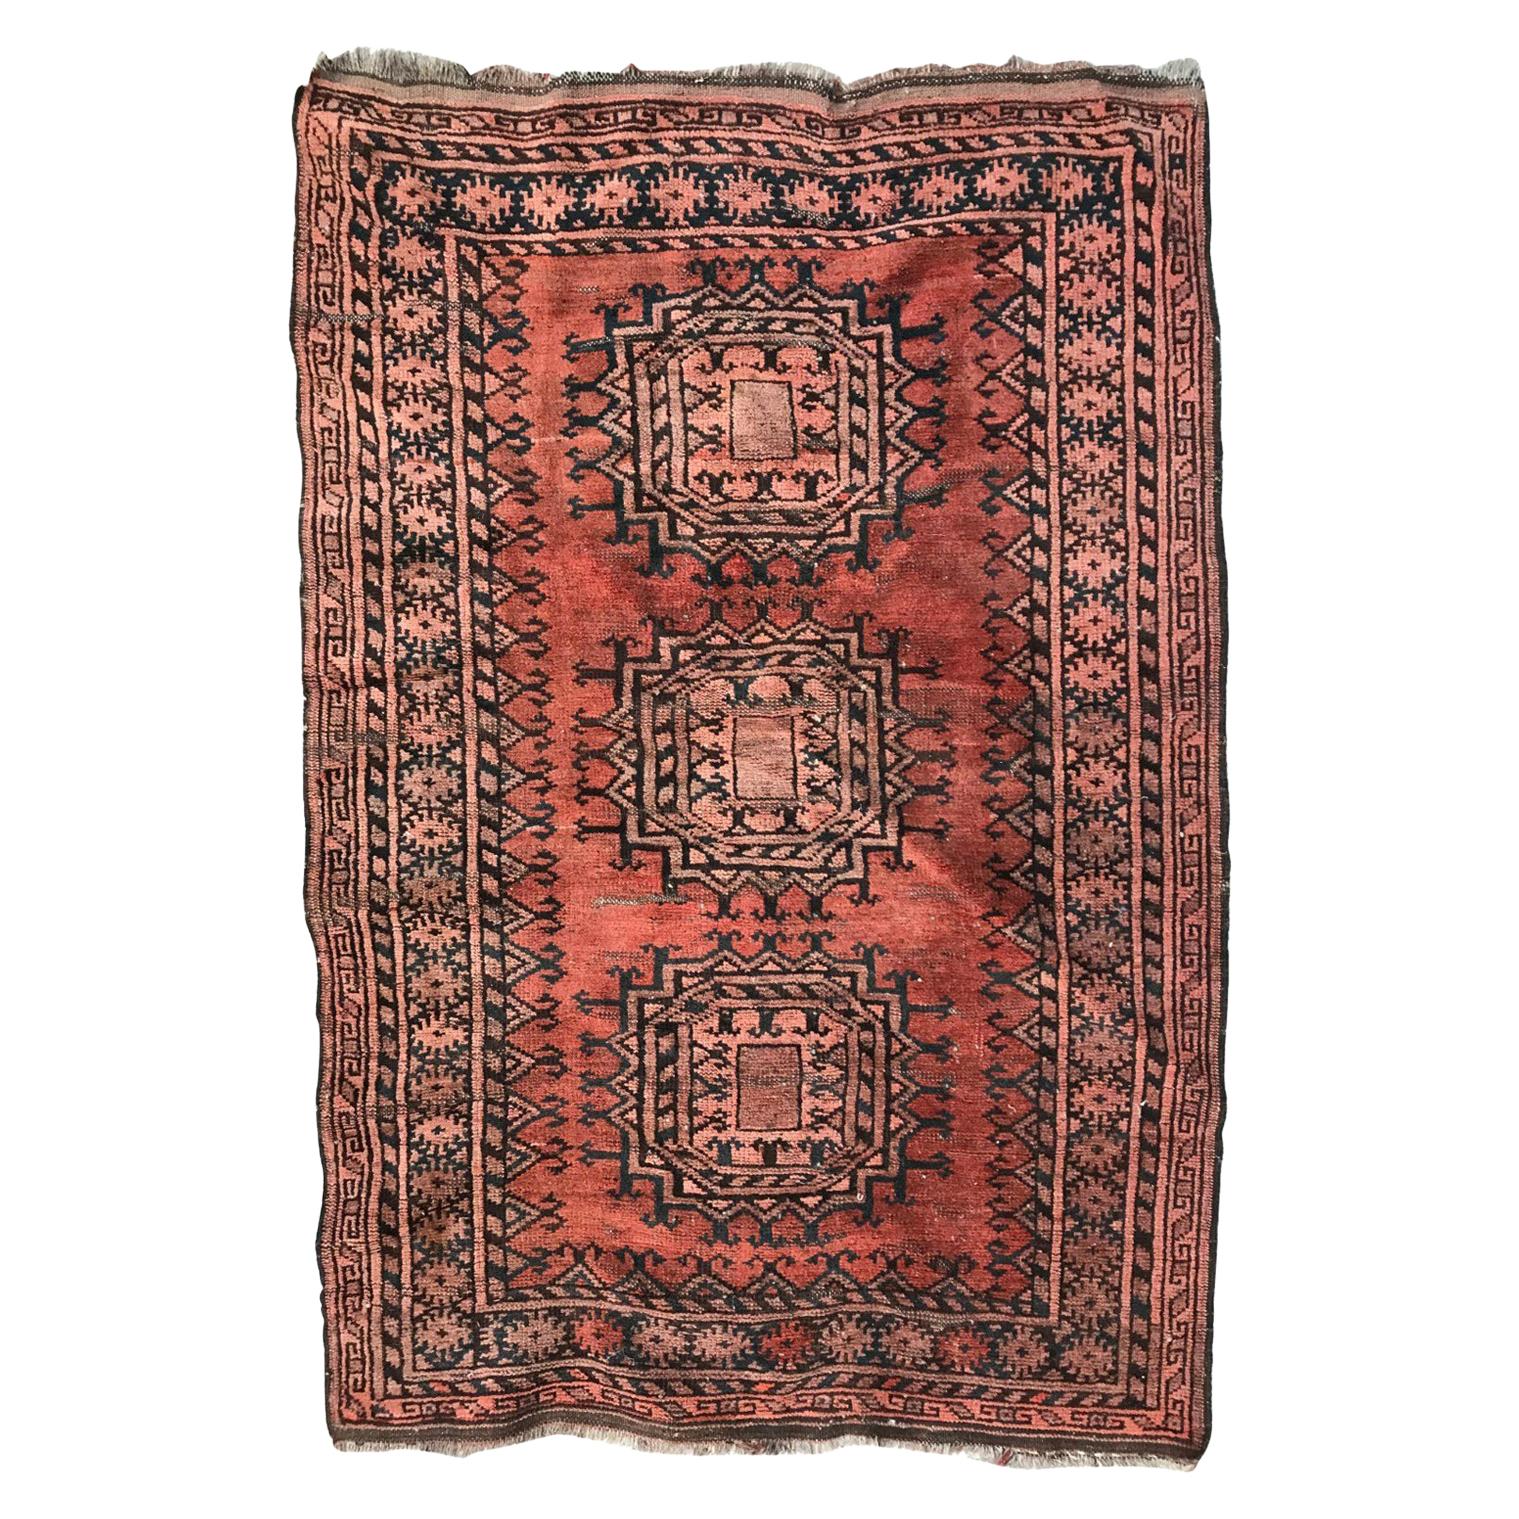 Antique Turkmen Belutch Afghan Rug